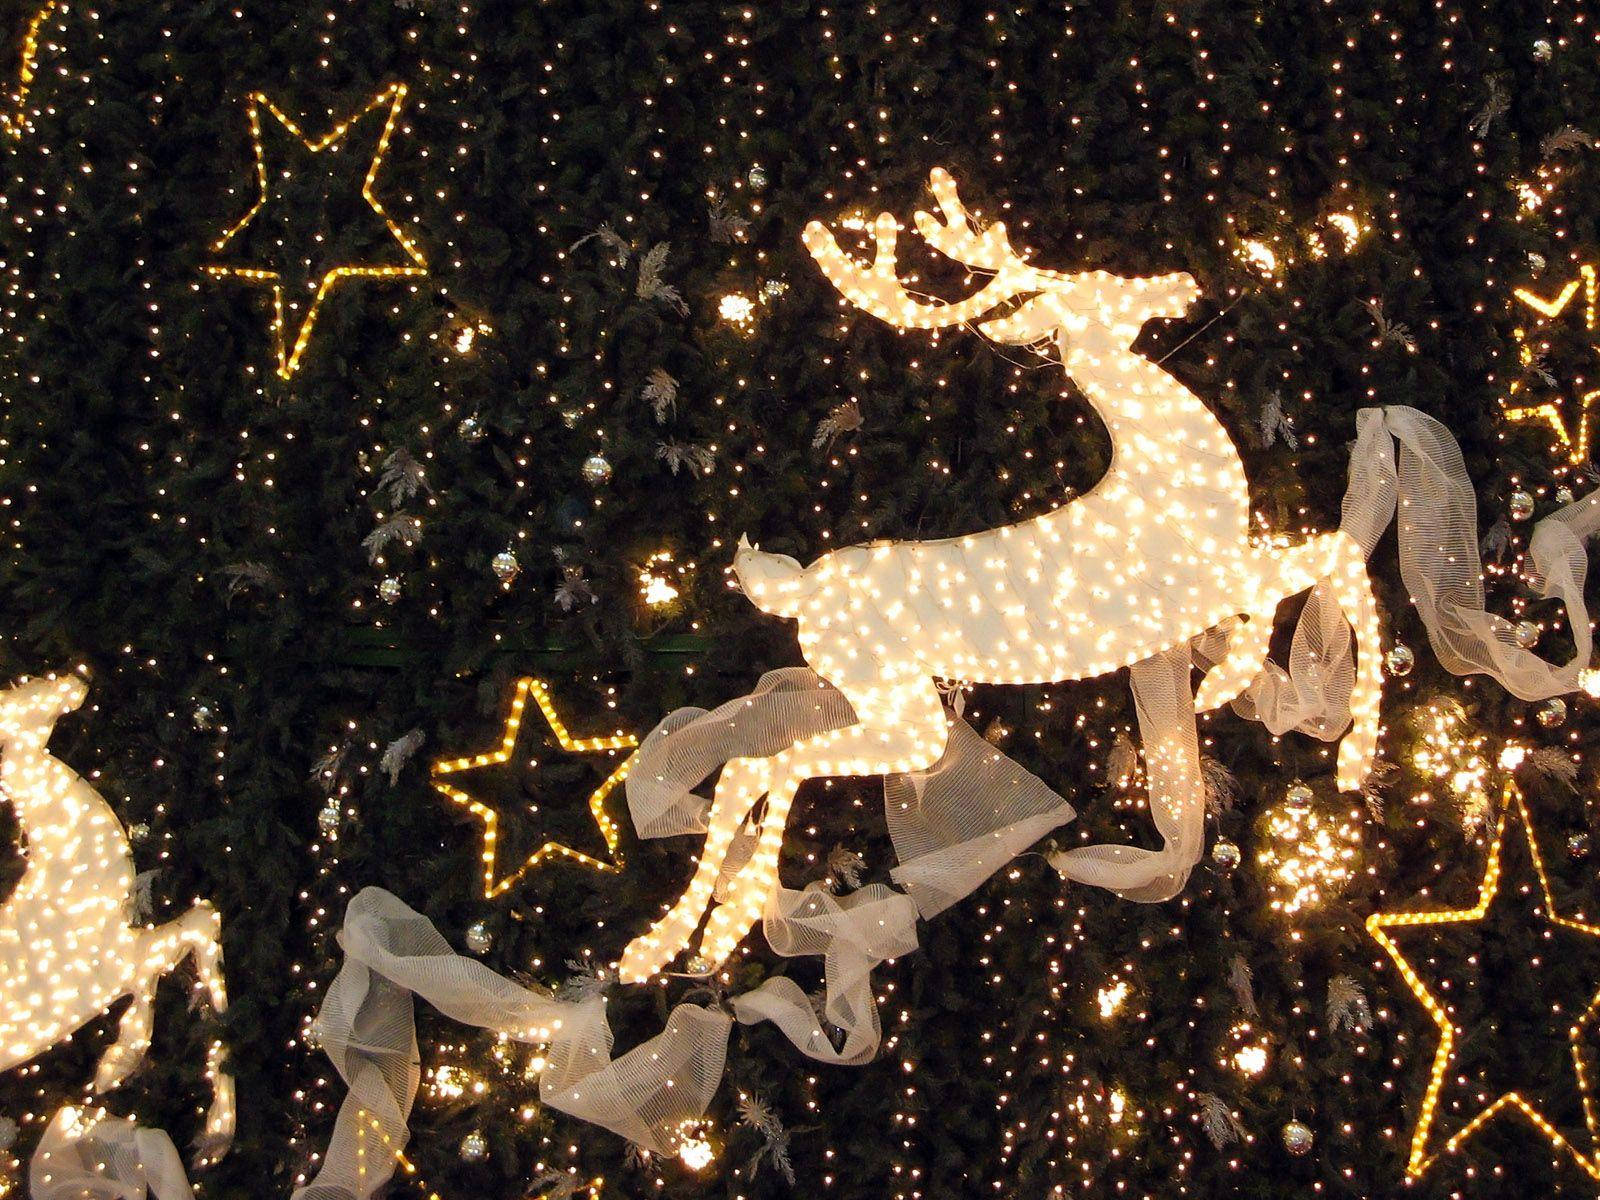 Aesthetic Christmas Lights Make For A Beautiful Display Wallpaper